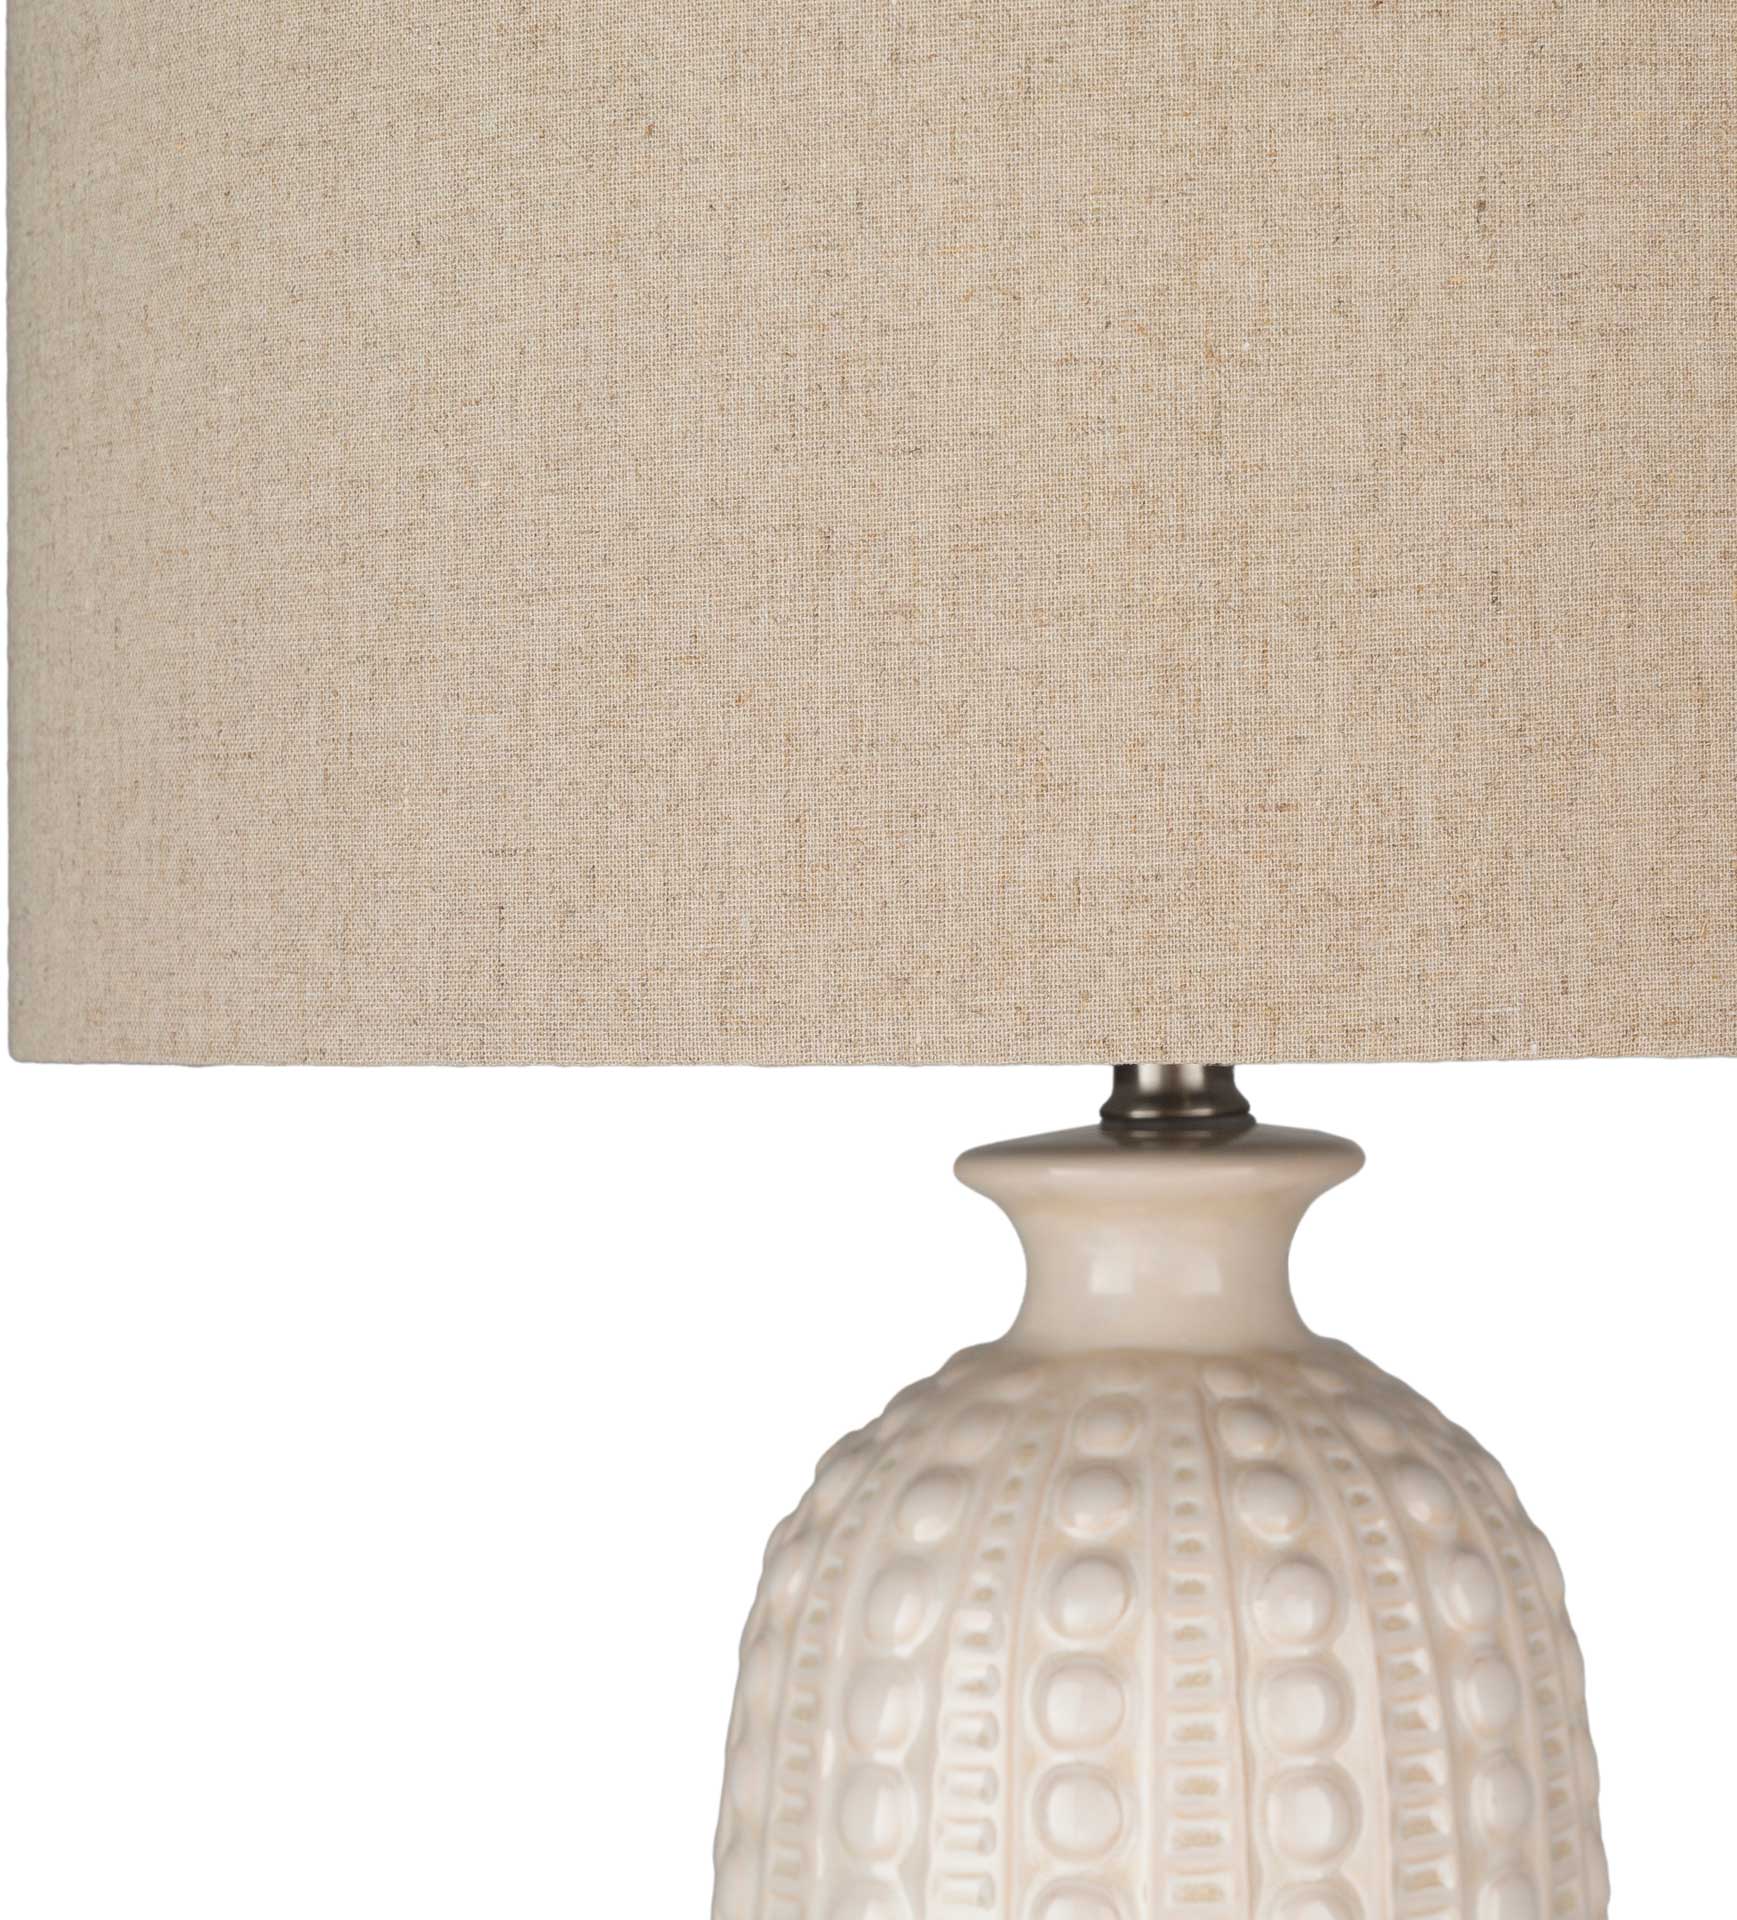 Nelson Table Lamp Camel/White/Ivory